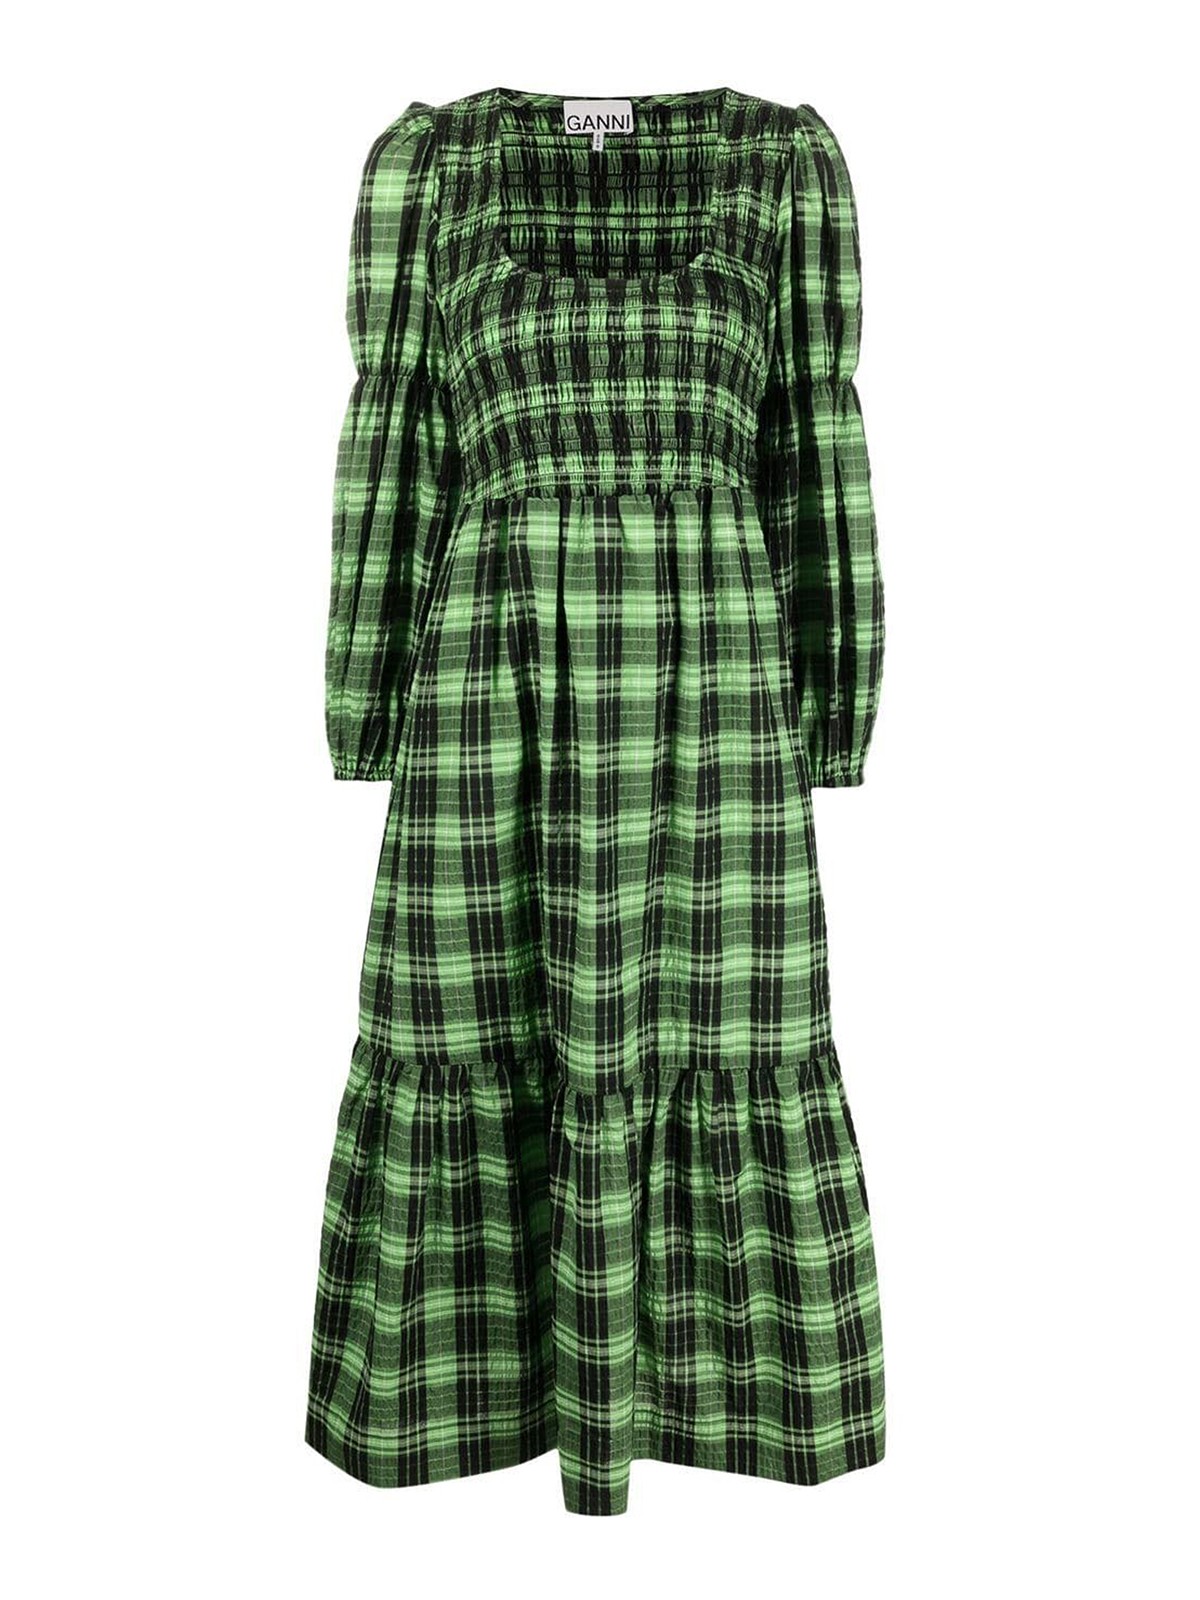 Ganni Checerboard Dress In Green